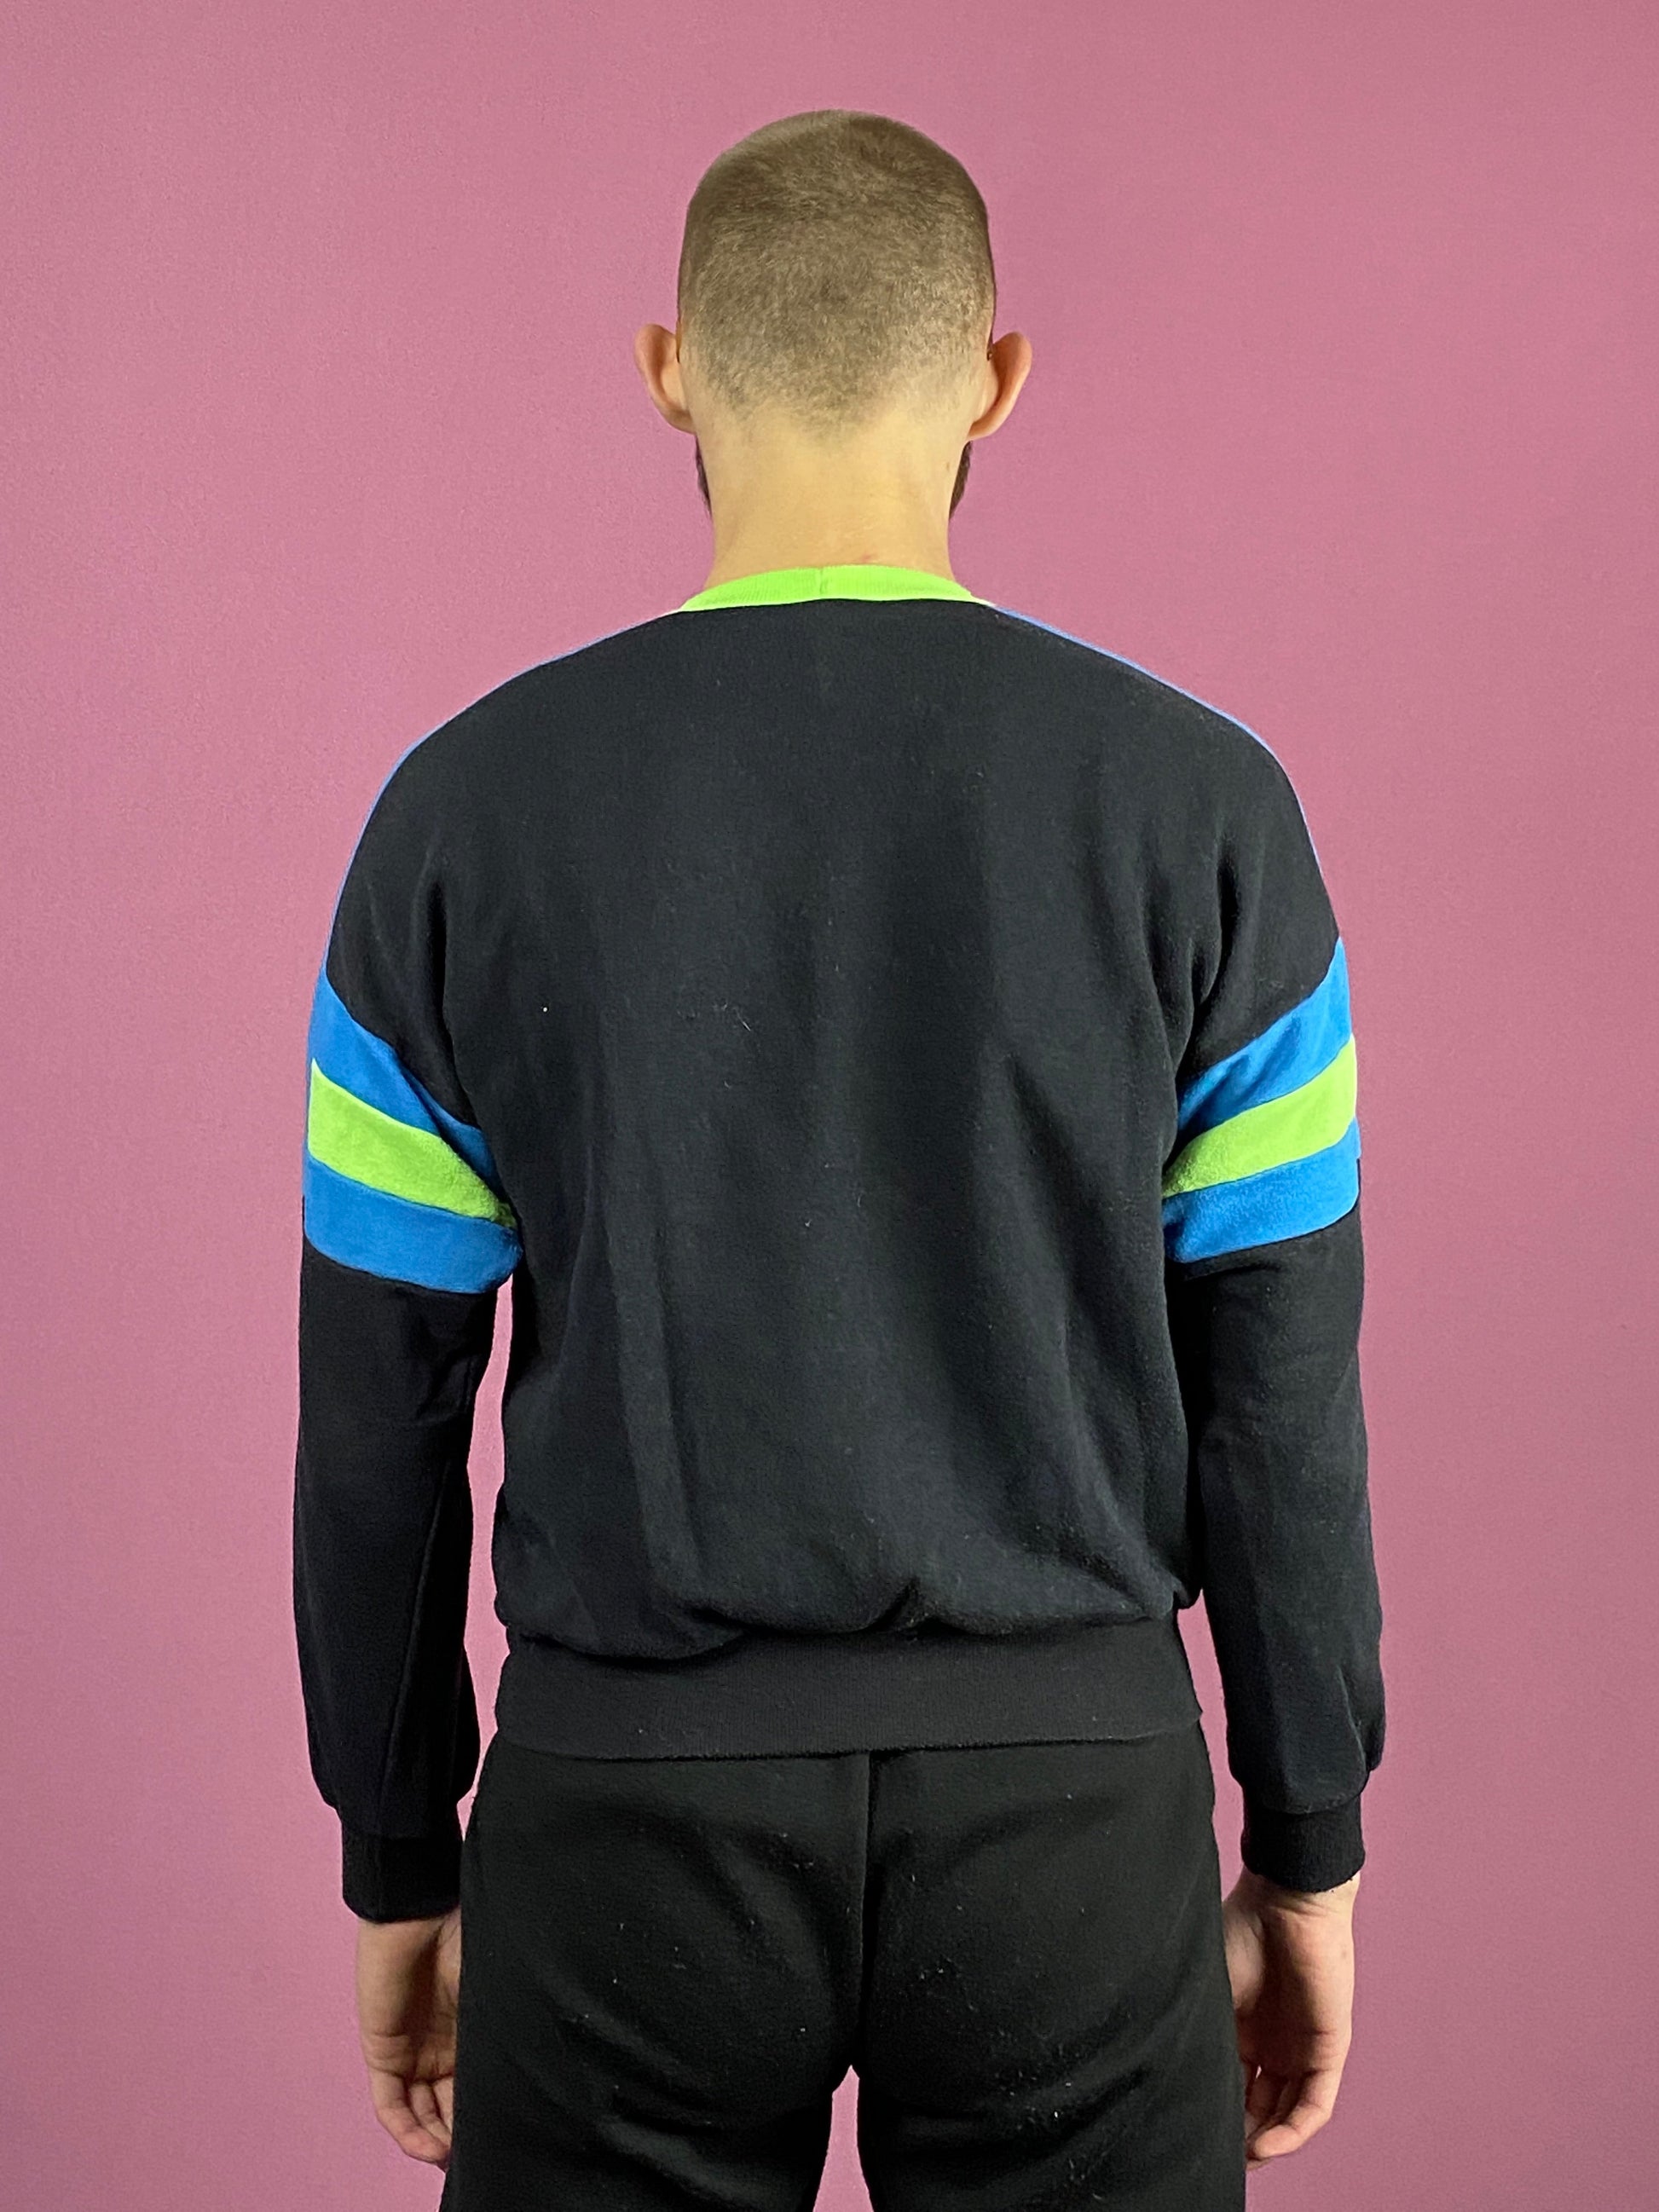 90s Adidas Vintage Men's Sweatshirt - Medium Black Cotton Blend